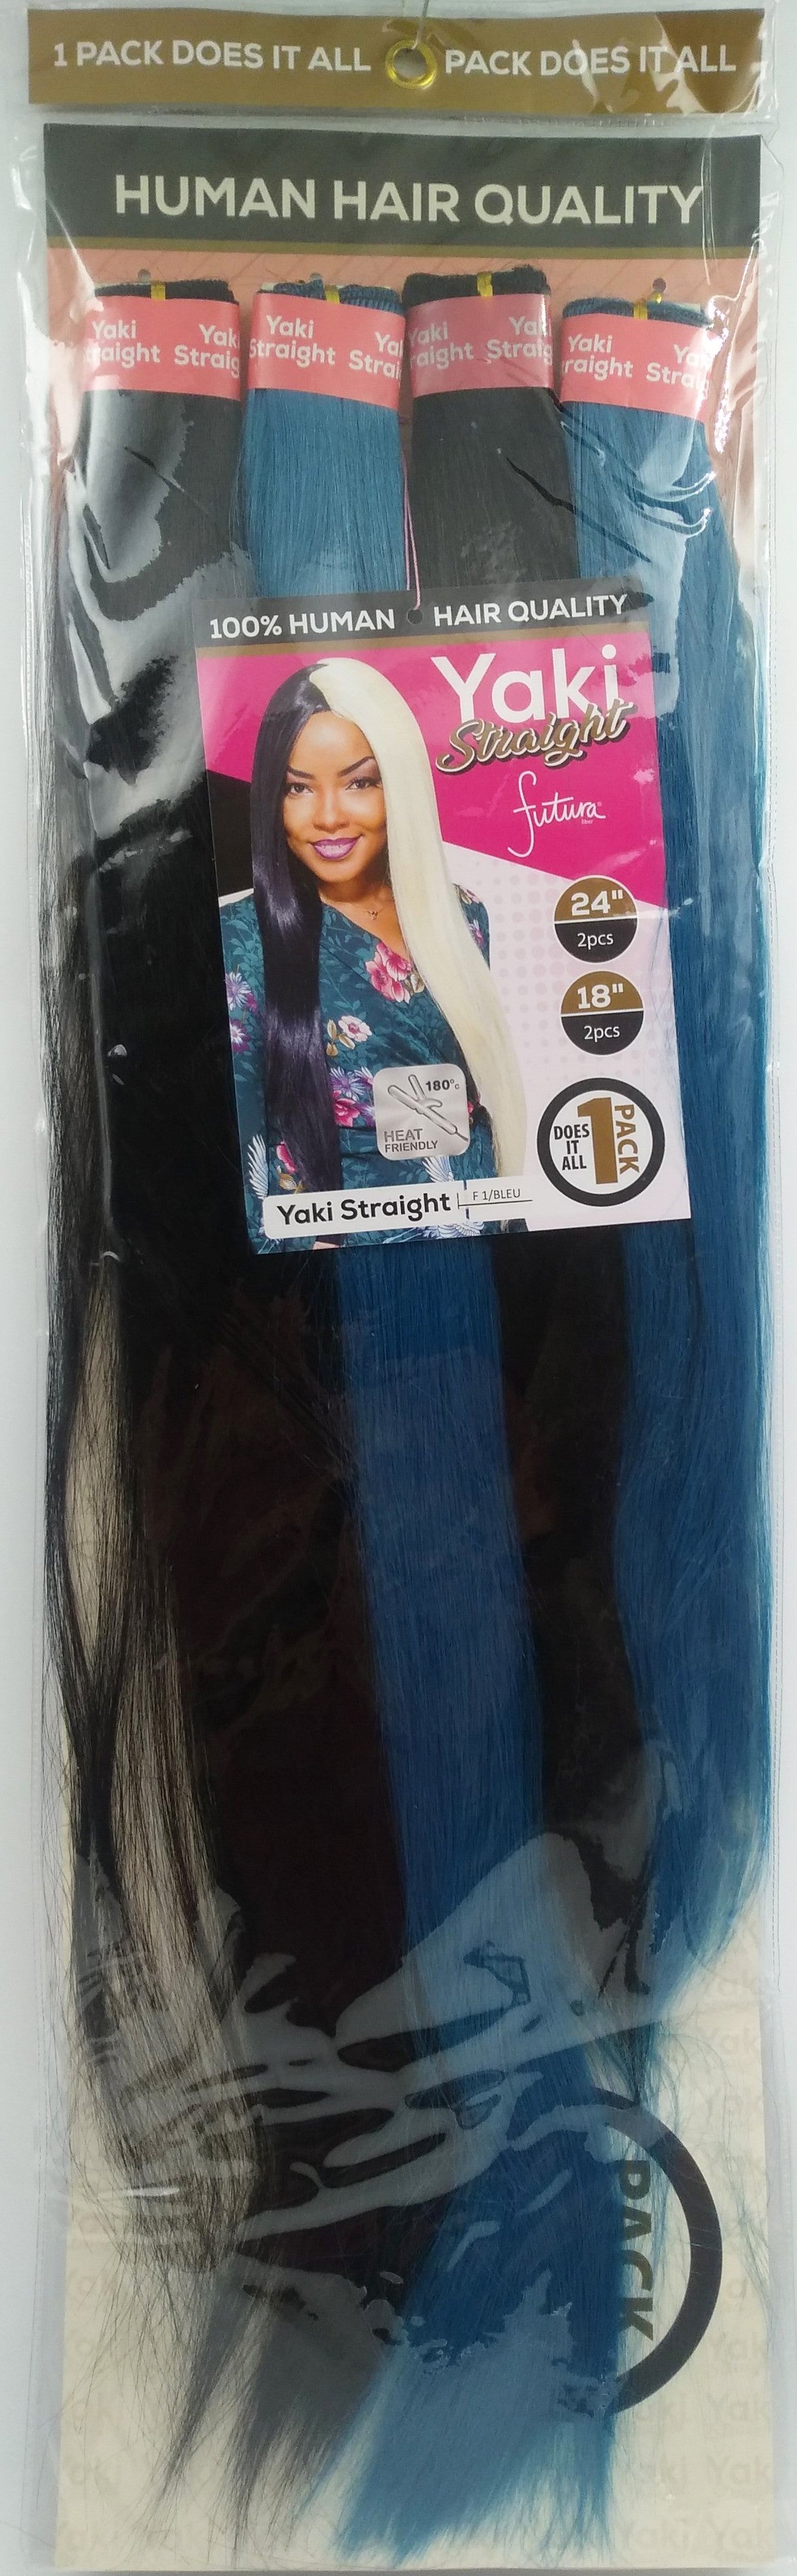 (HAIR HUMAN) Darling Yaki Straight Human Hair Quality 18/24'' F1/Blue.